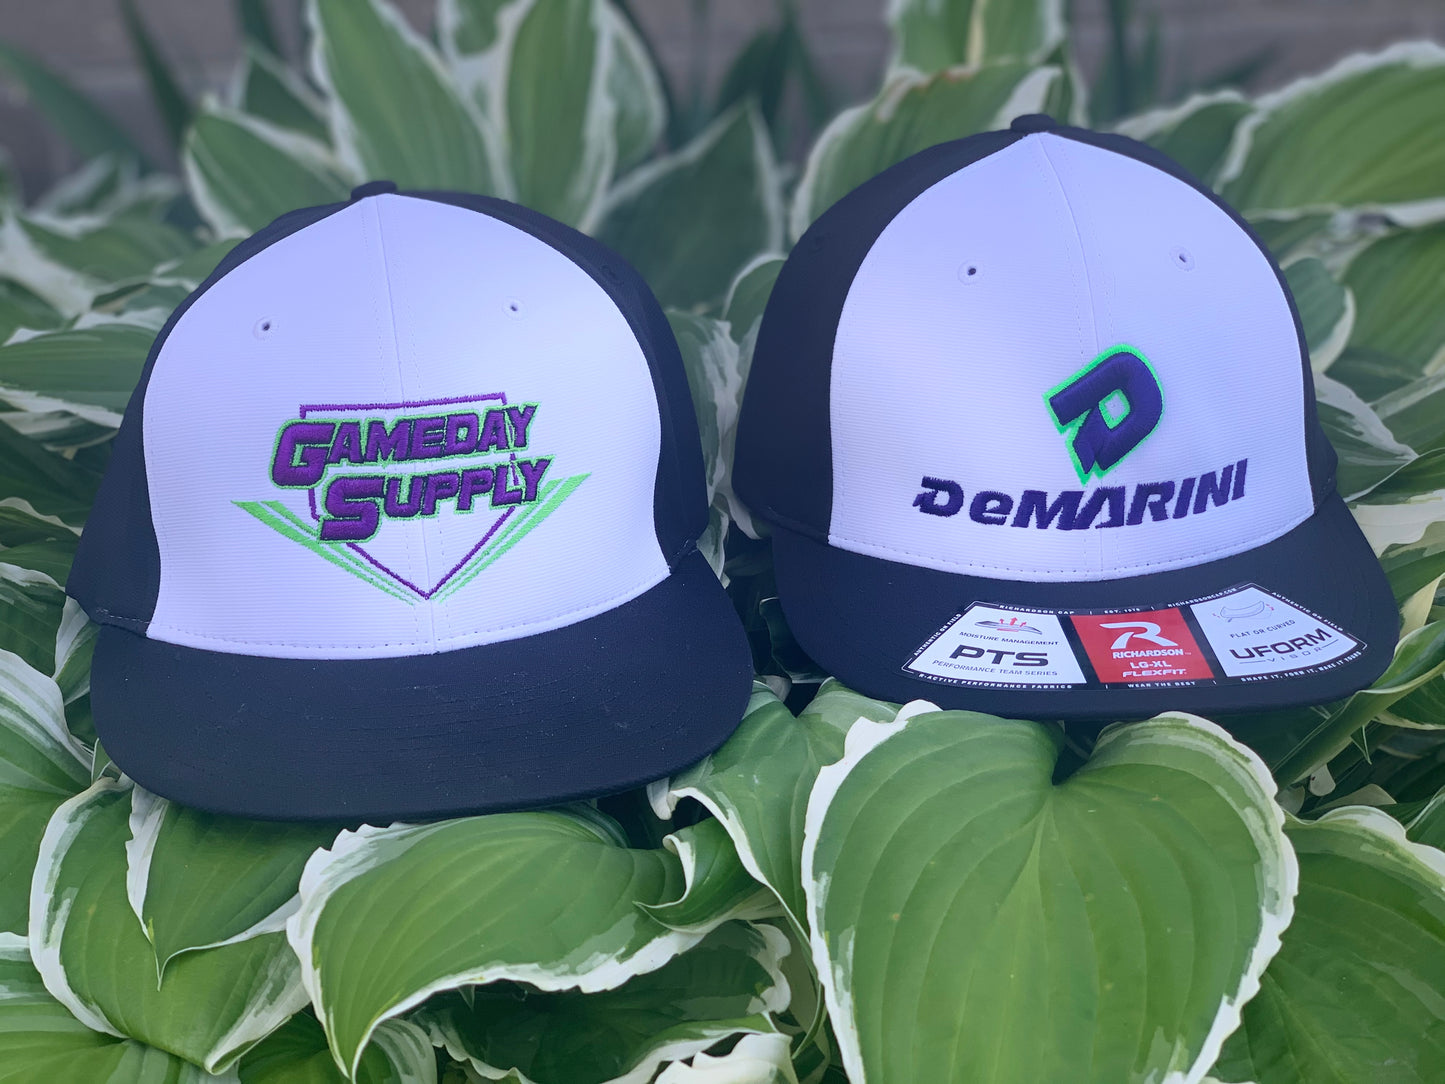 Gameday Supply/Demarini Team hats